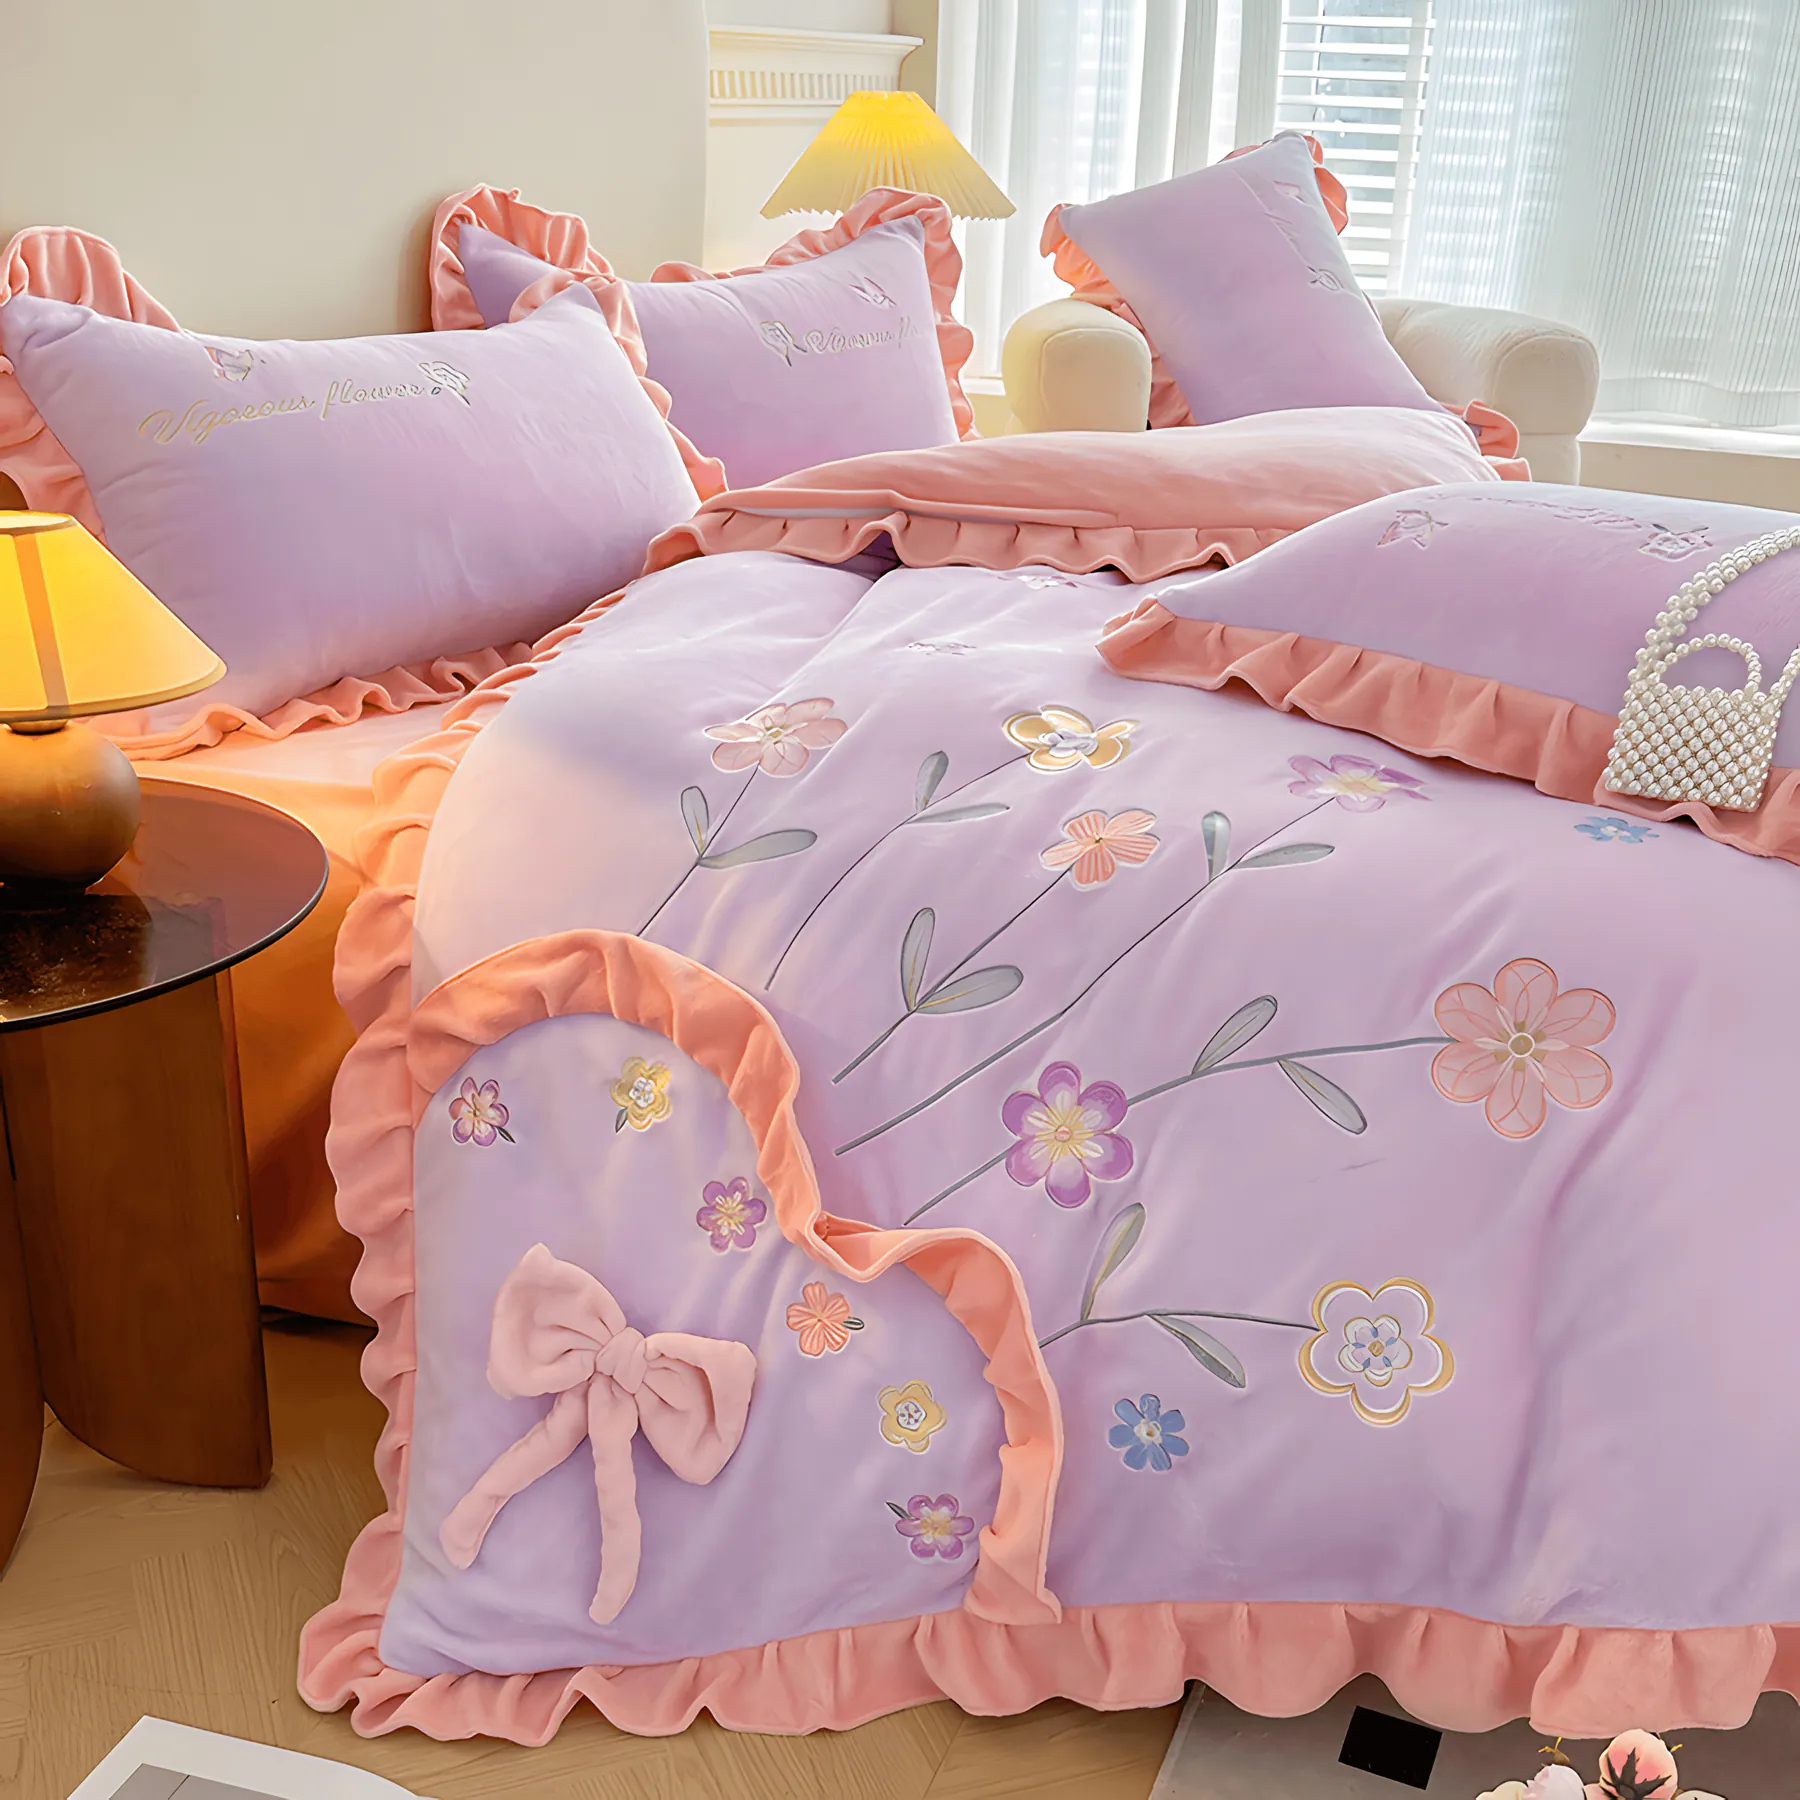 Romantic Milk Fiber Comforter Cover Bed Sheet Pillowcases 4 Pcs Set06